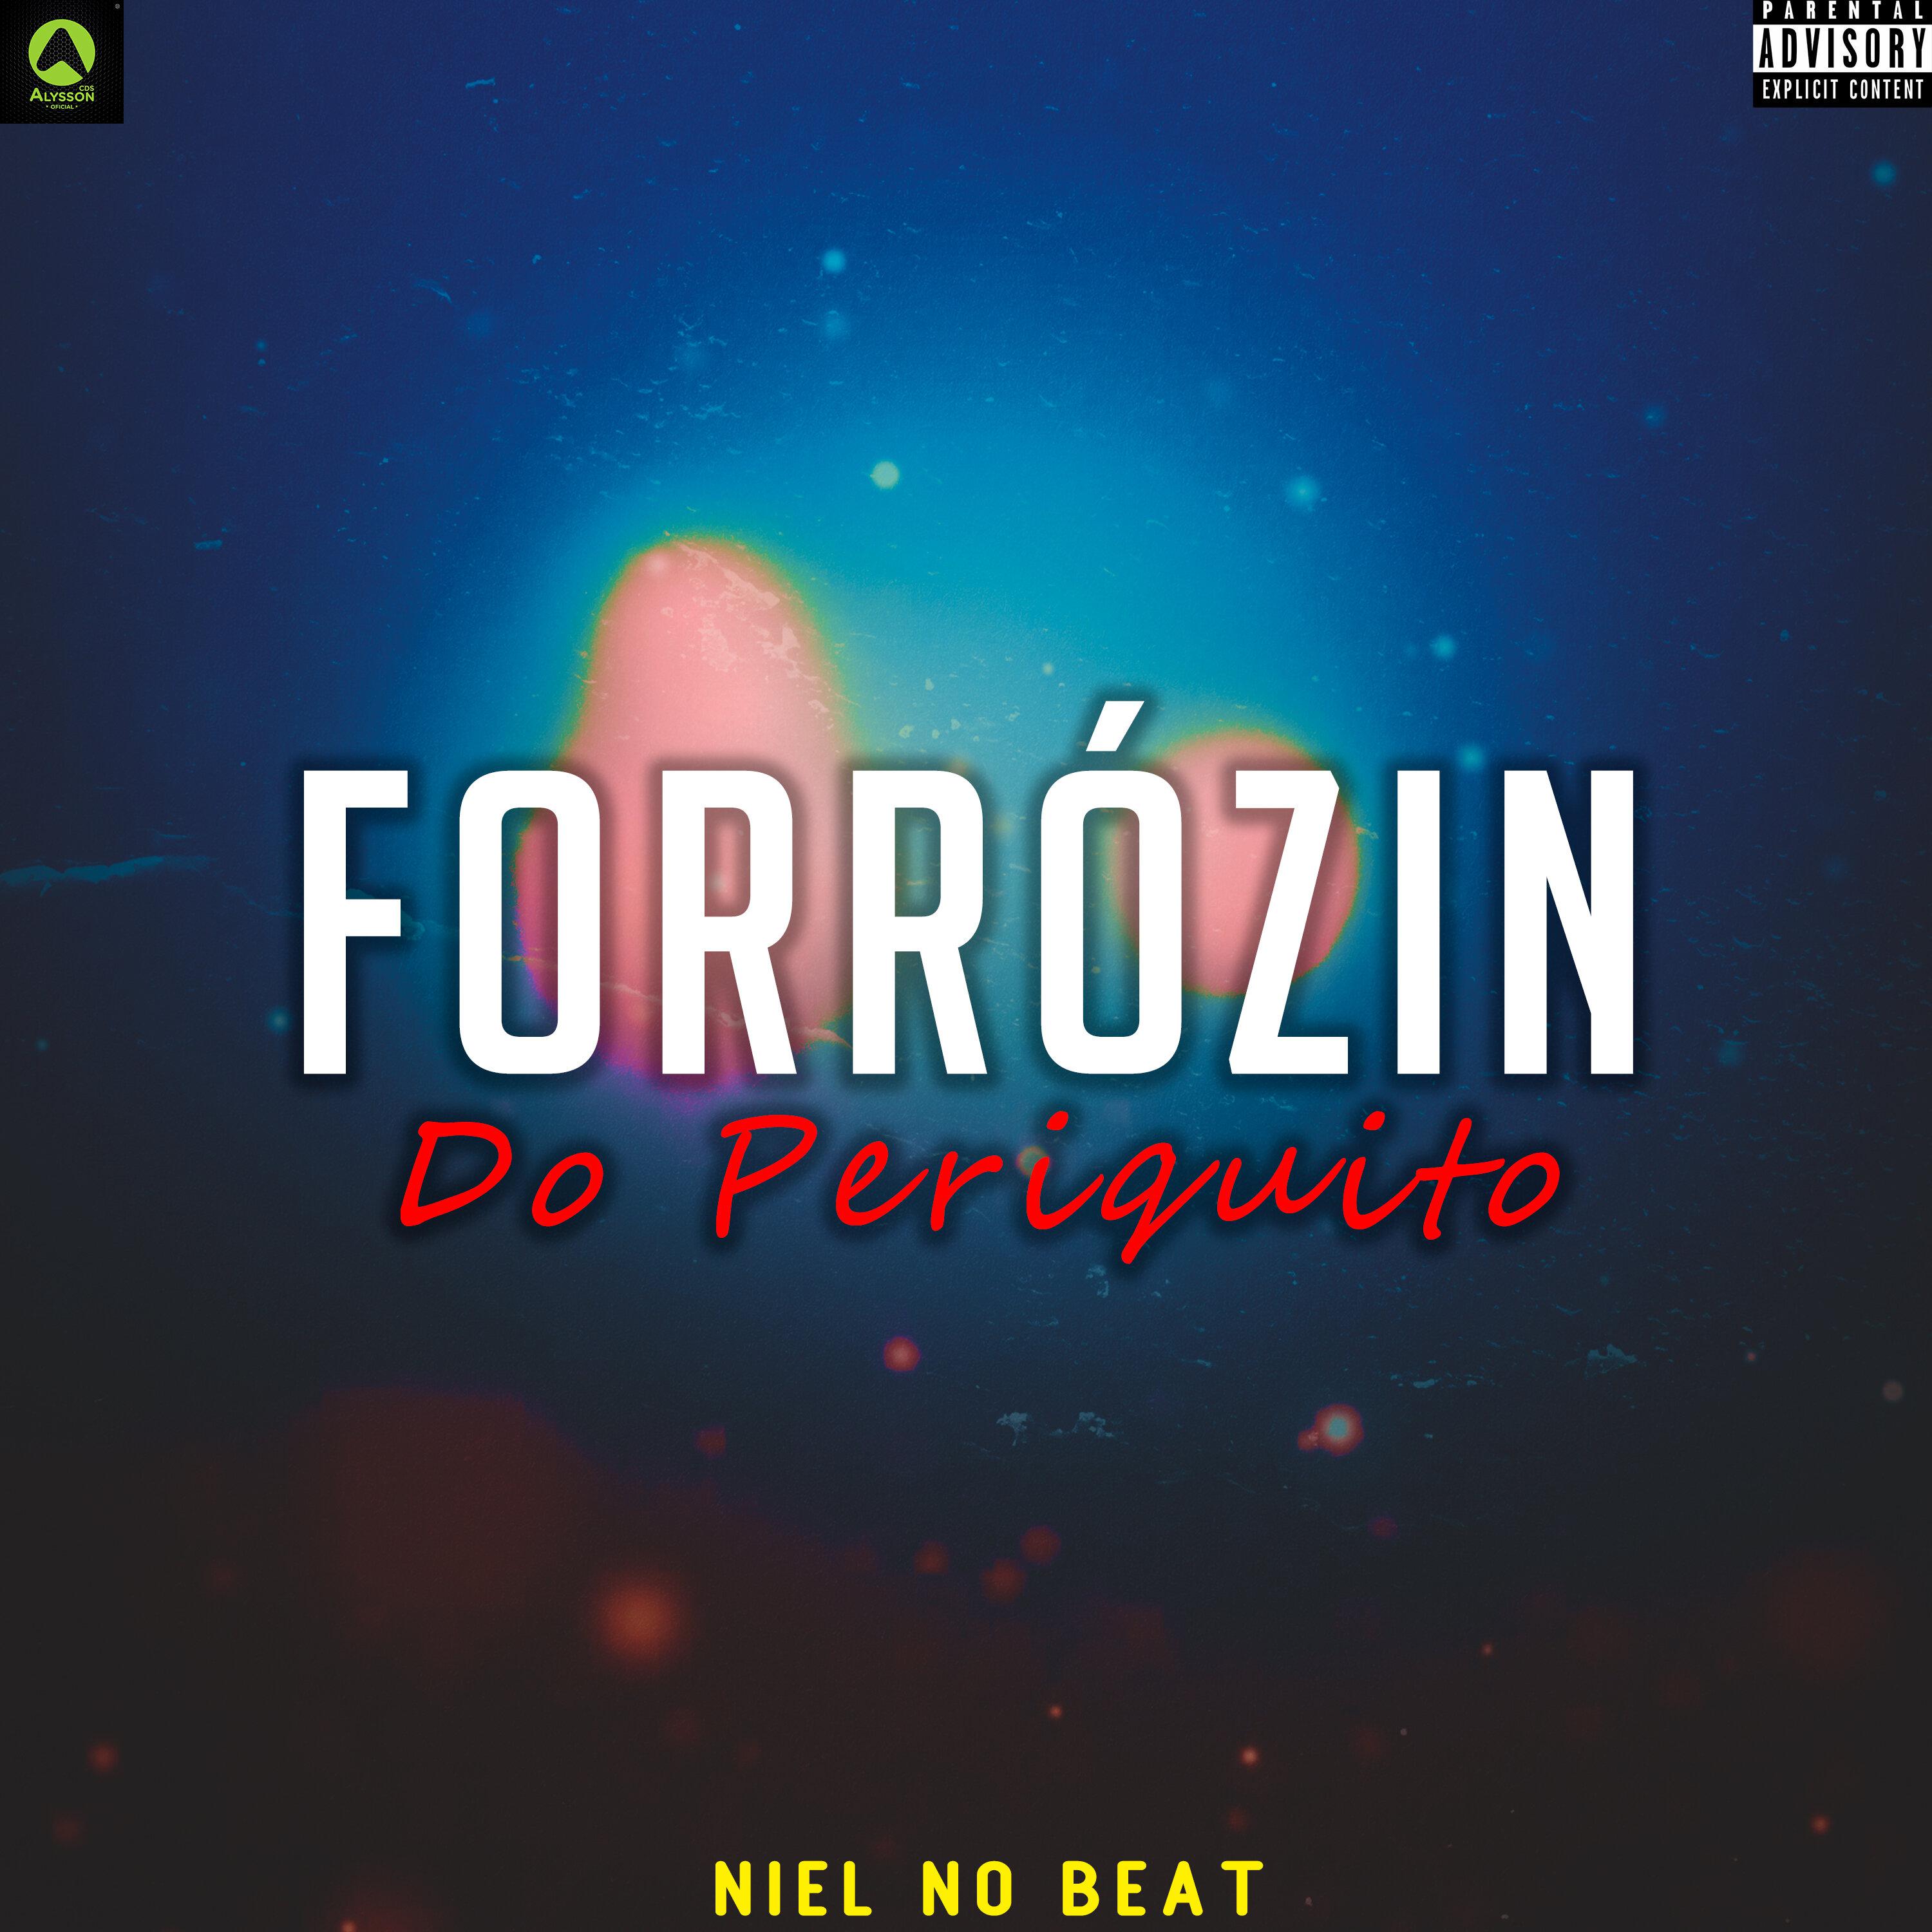 Niel No Beat - Forrózin do Periquito